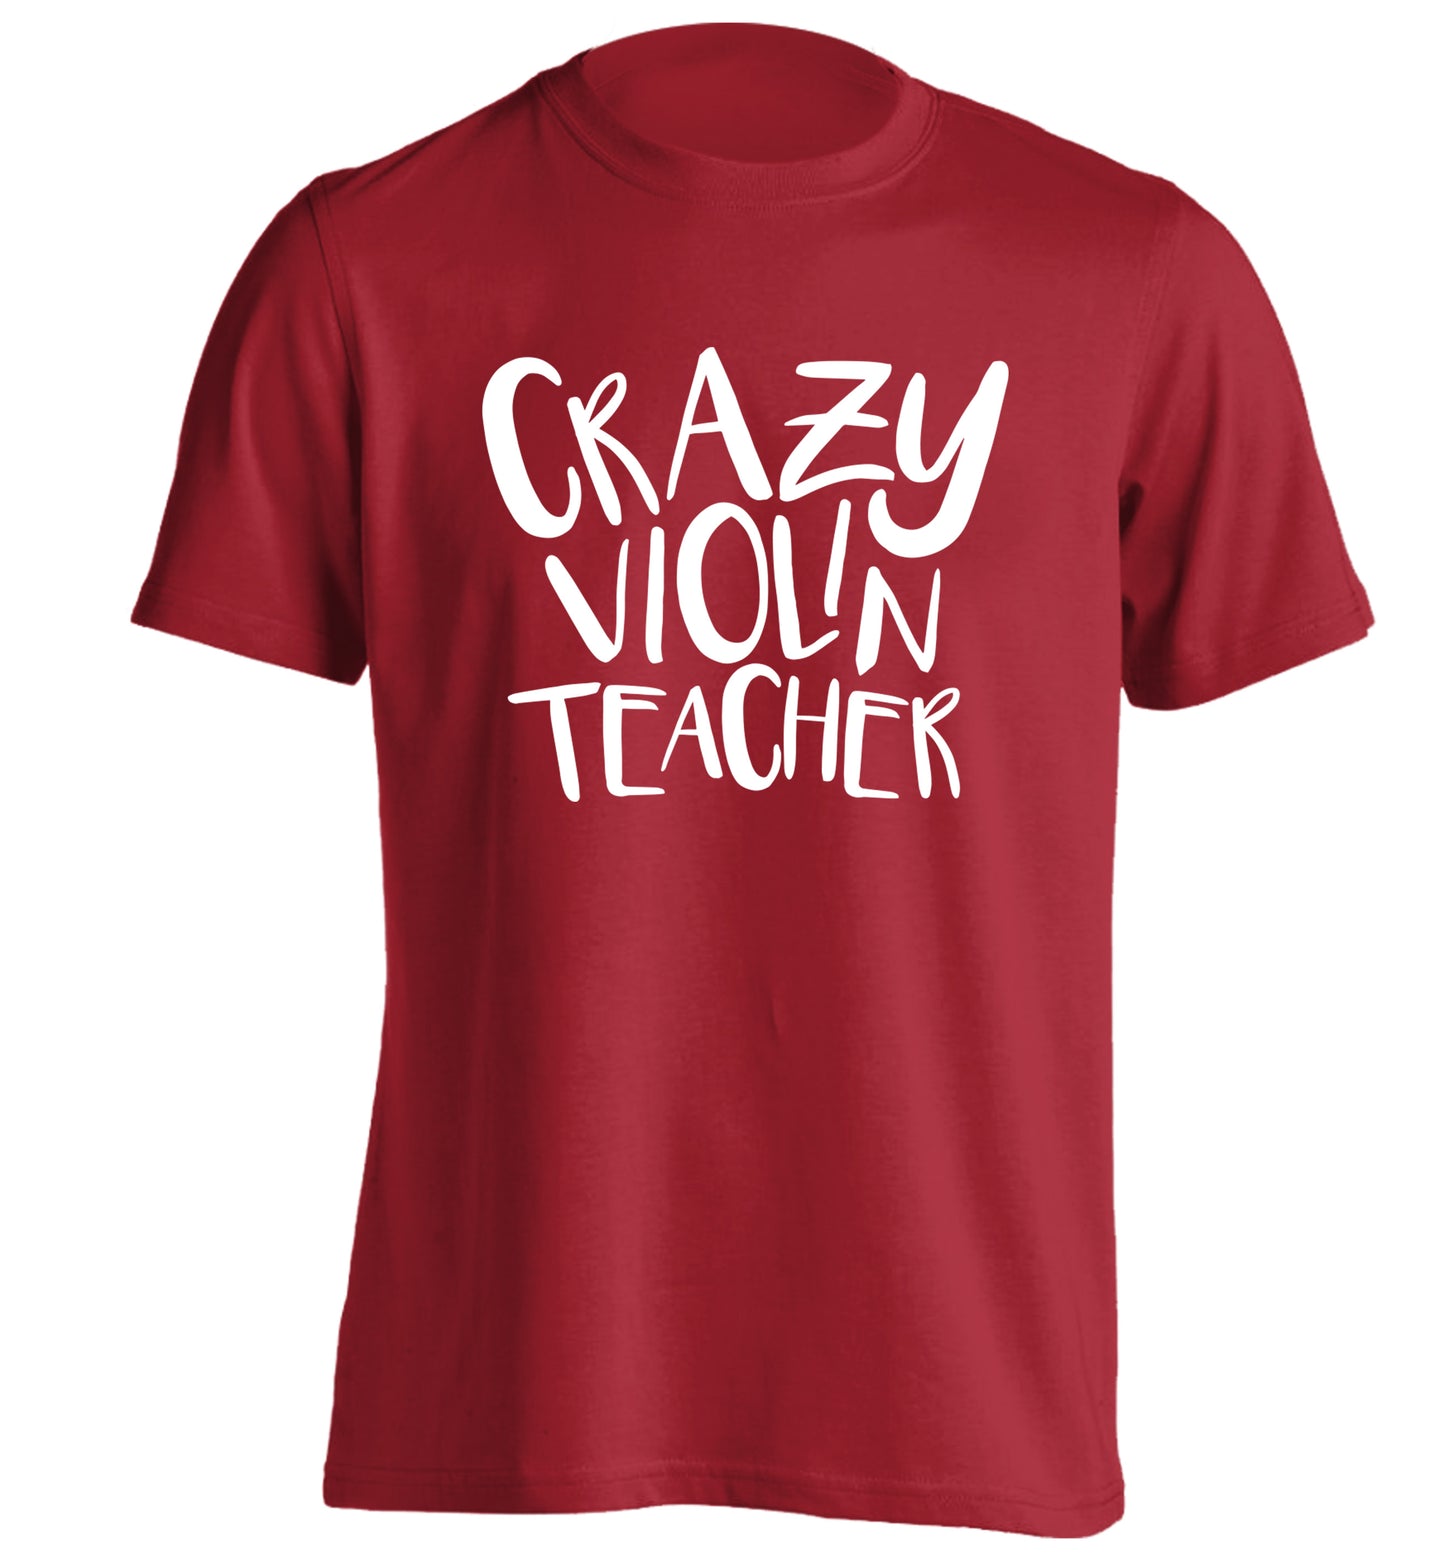 Crazy violin teacher adults unisex red Tshirt 2XL